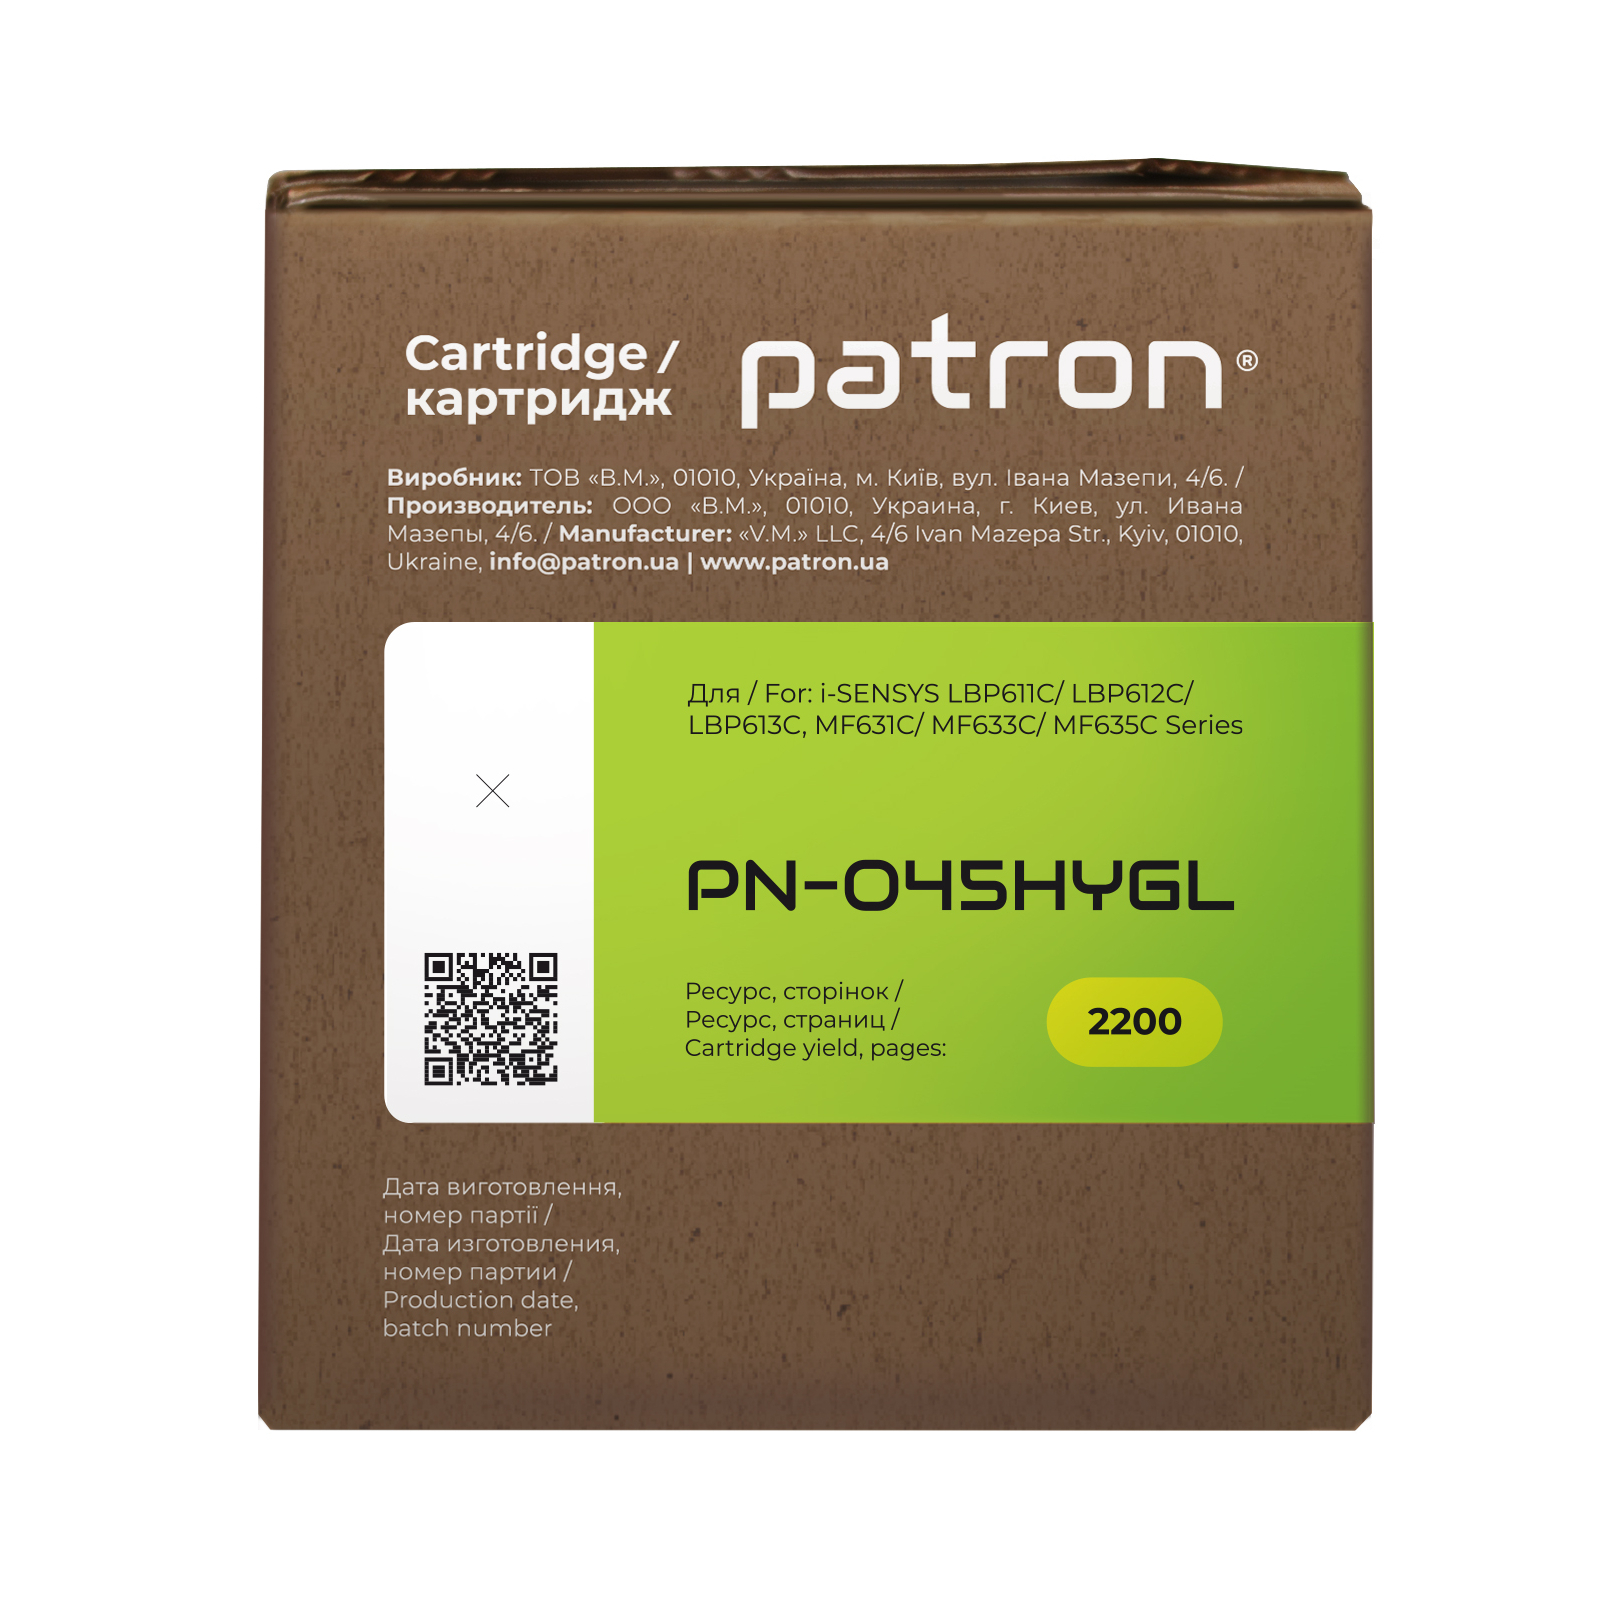 Картридж Patron CANON 045 BLACK GREEN Label (PN-045KGL) изображение 3